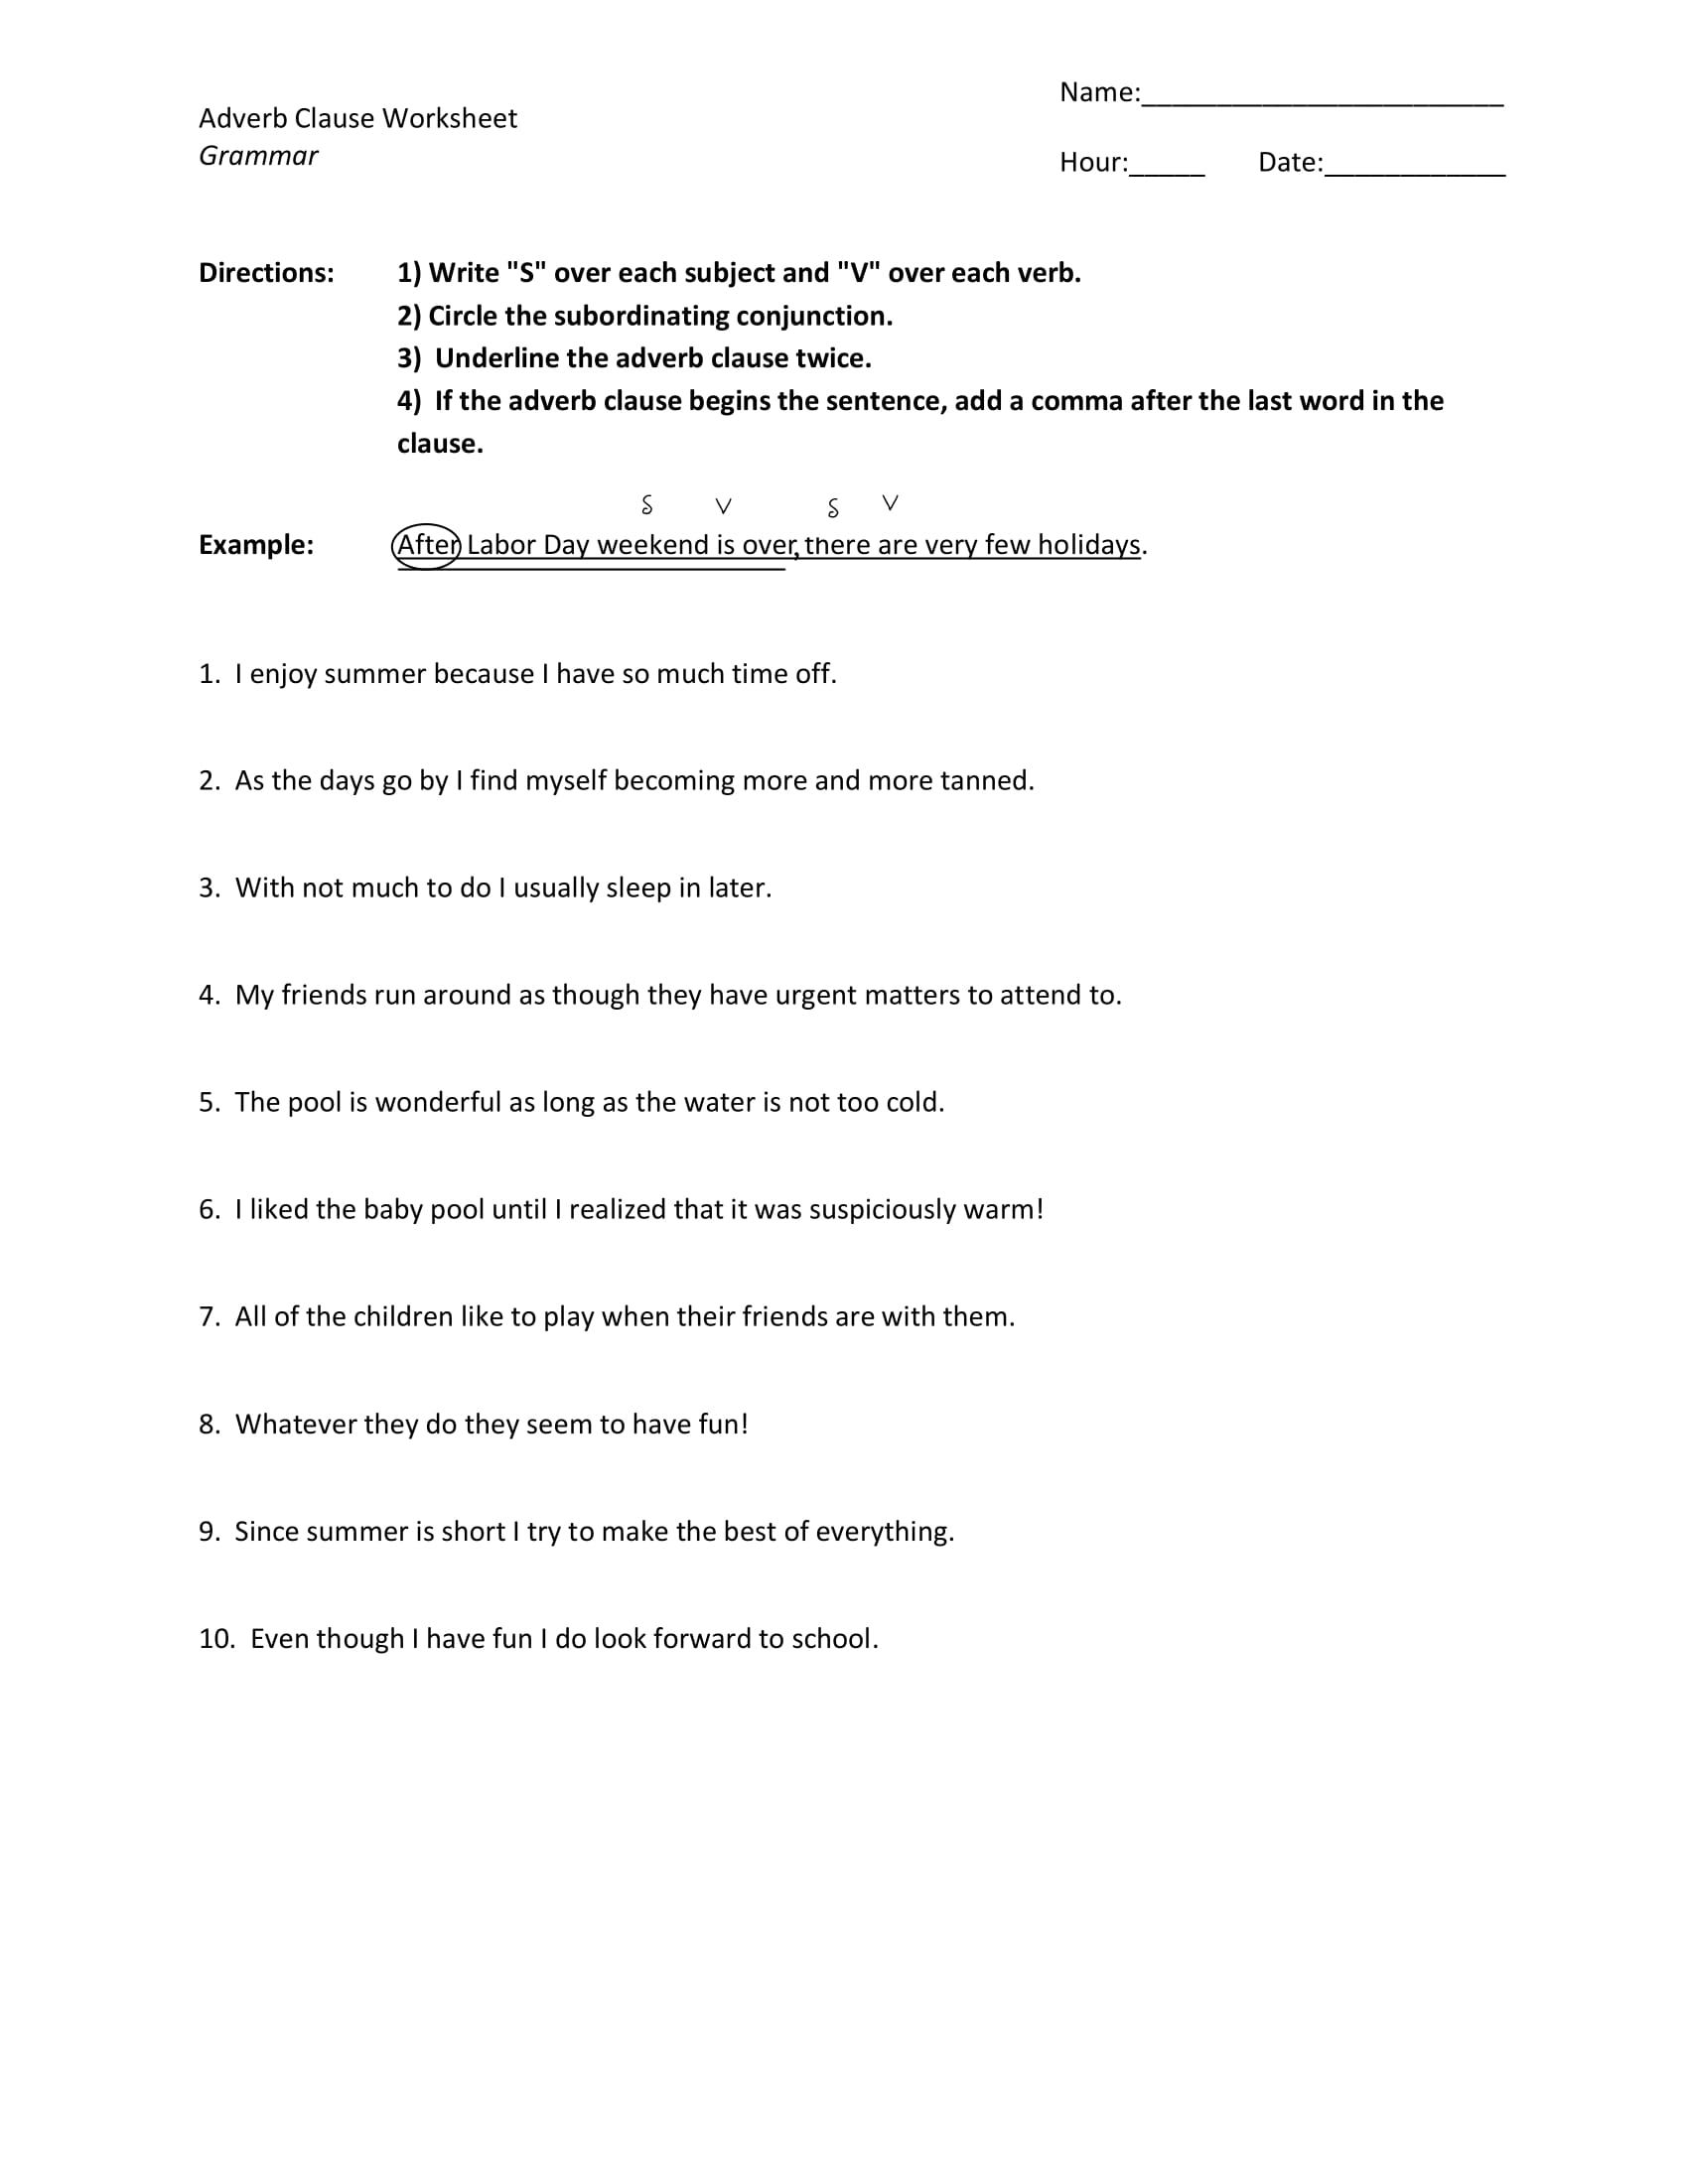 adverb clause worksheet example2